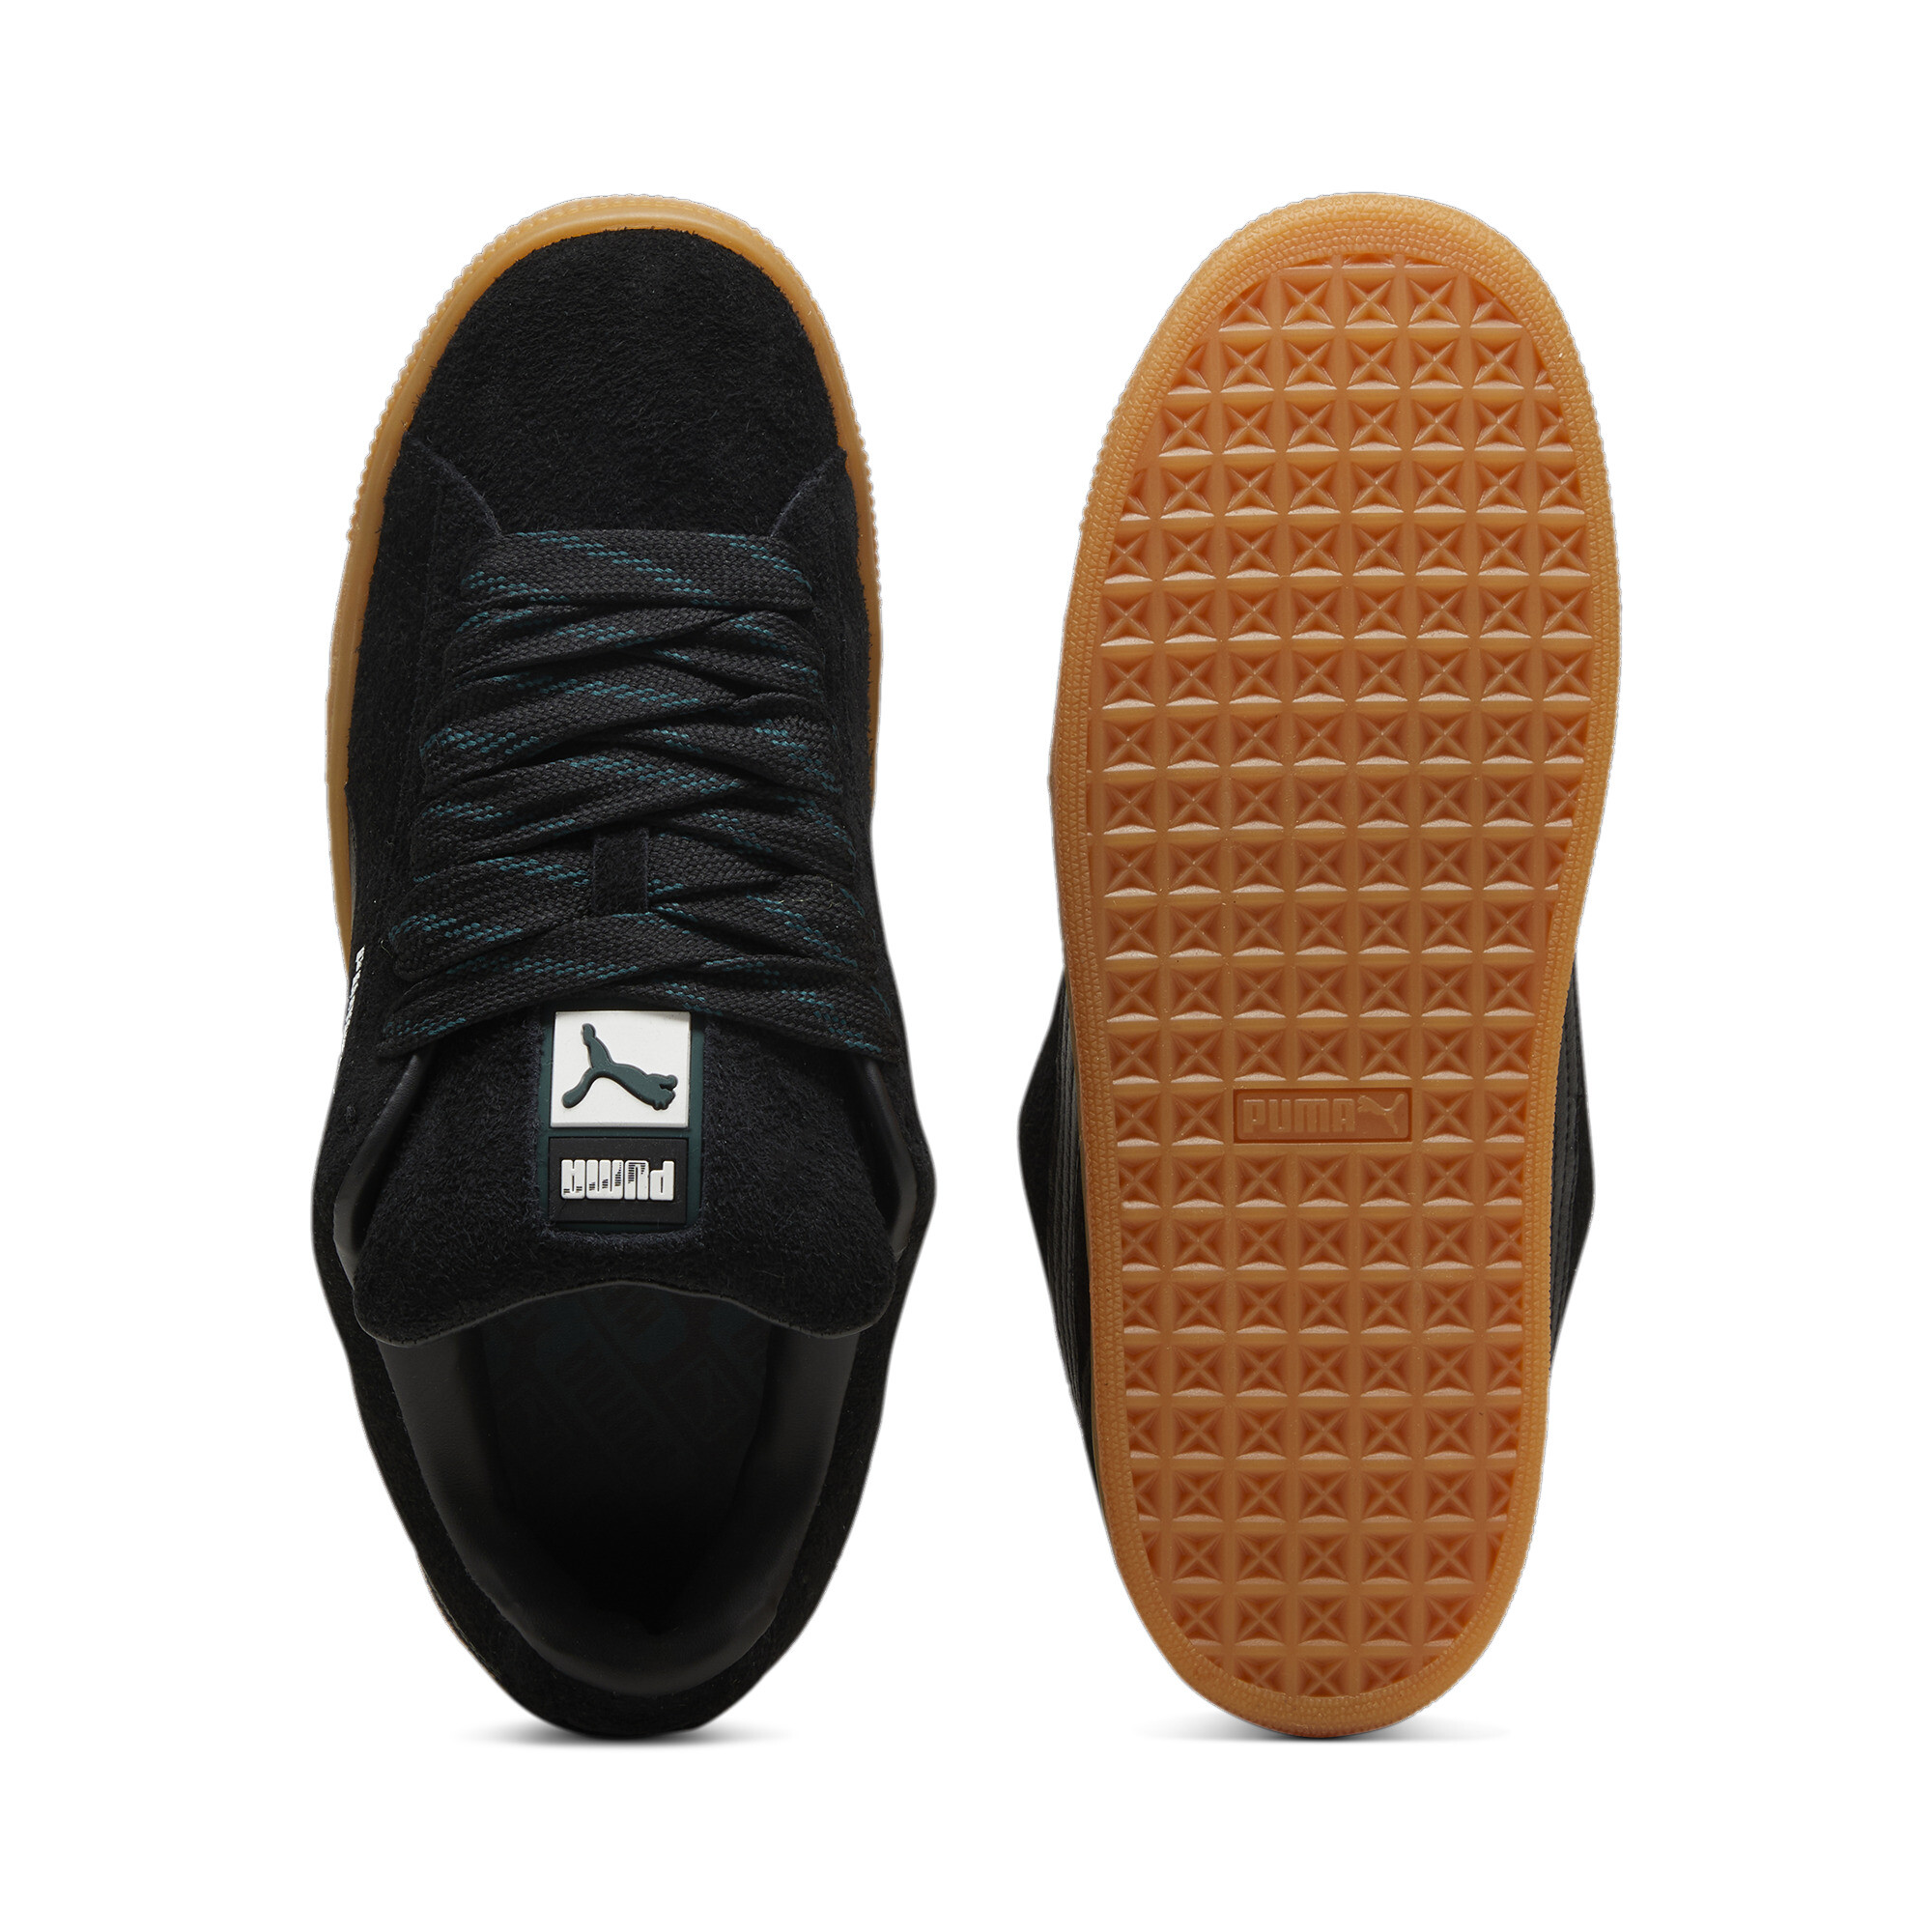 Puma Suede XL Flecked Unisex, Black, Size 40.5, Shoes